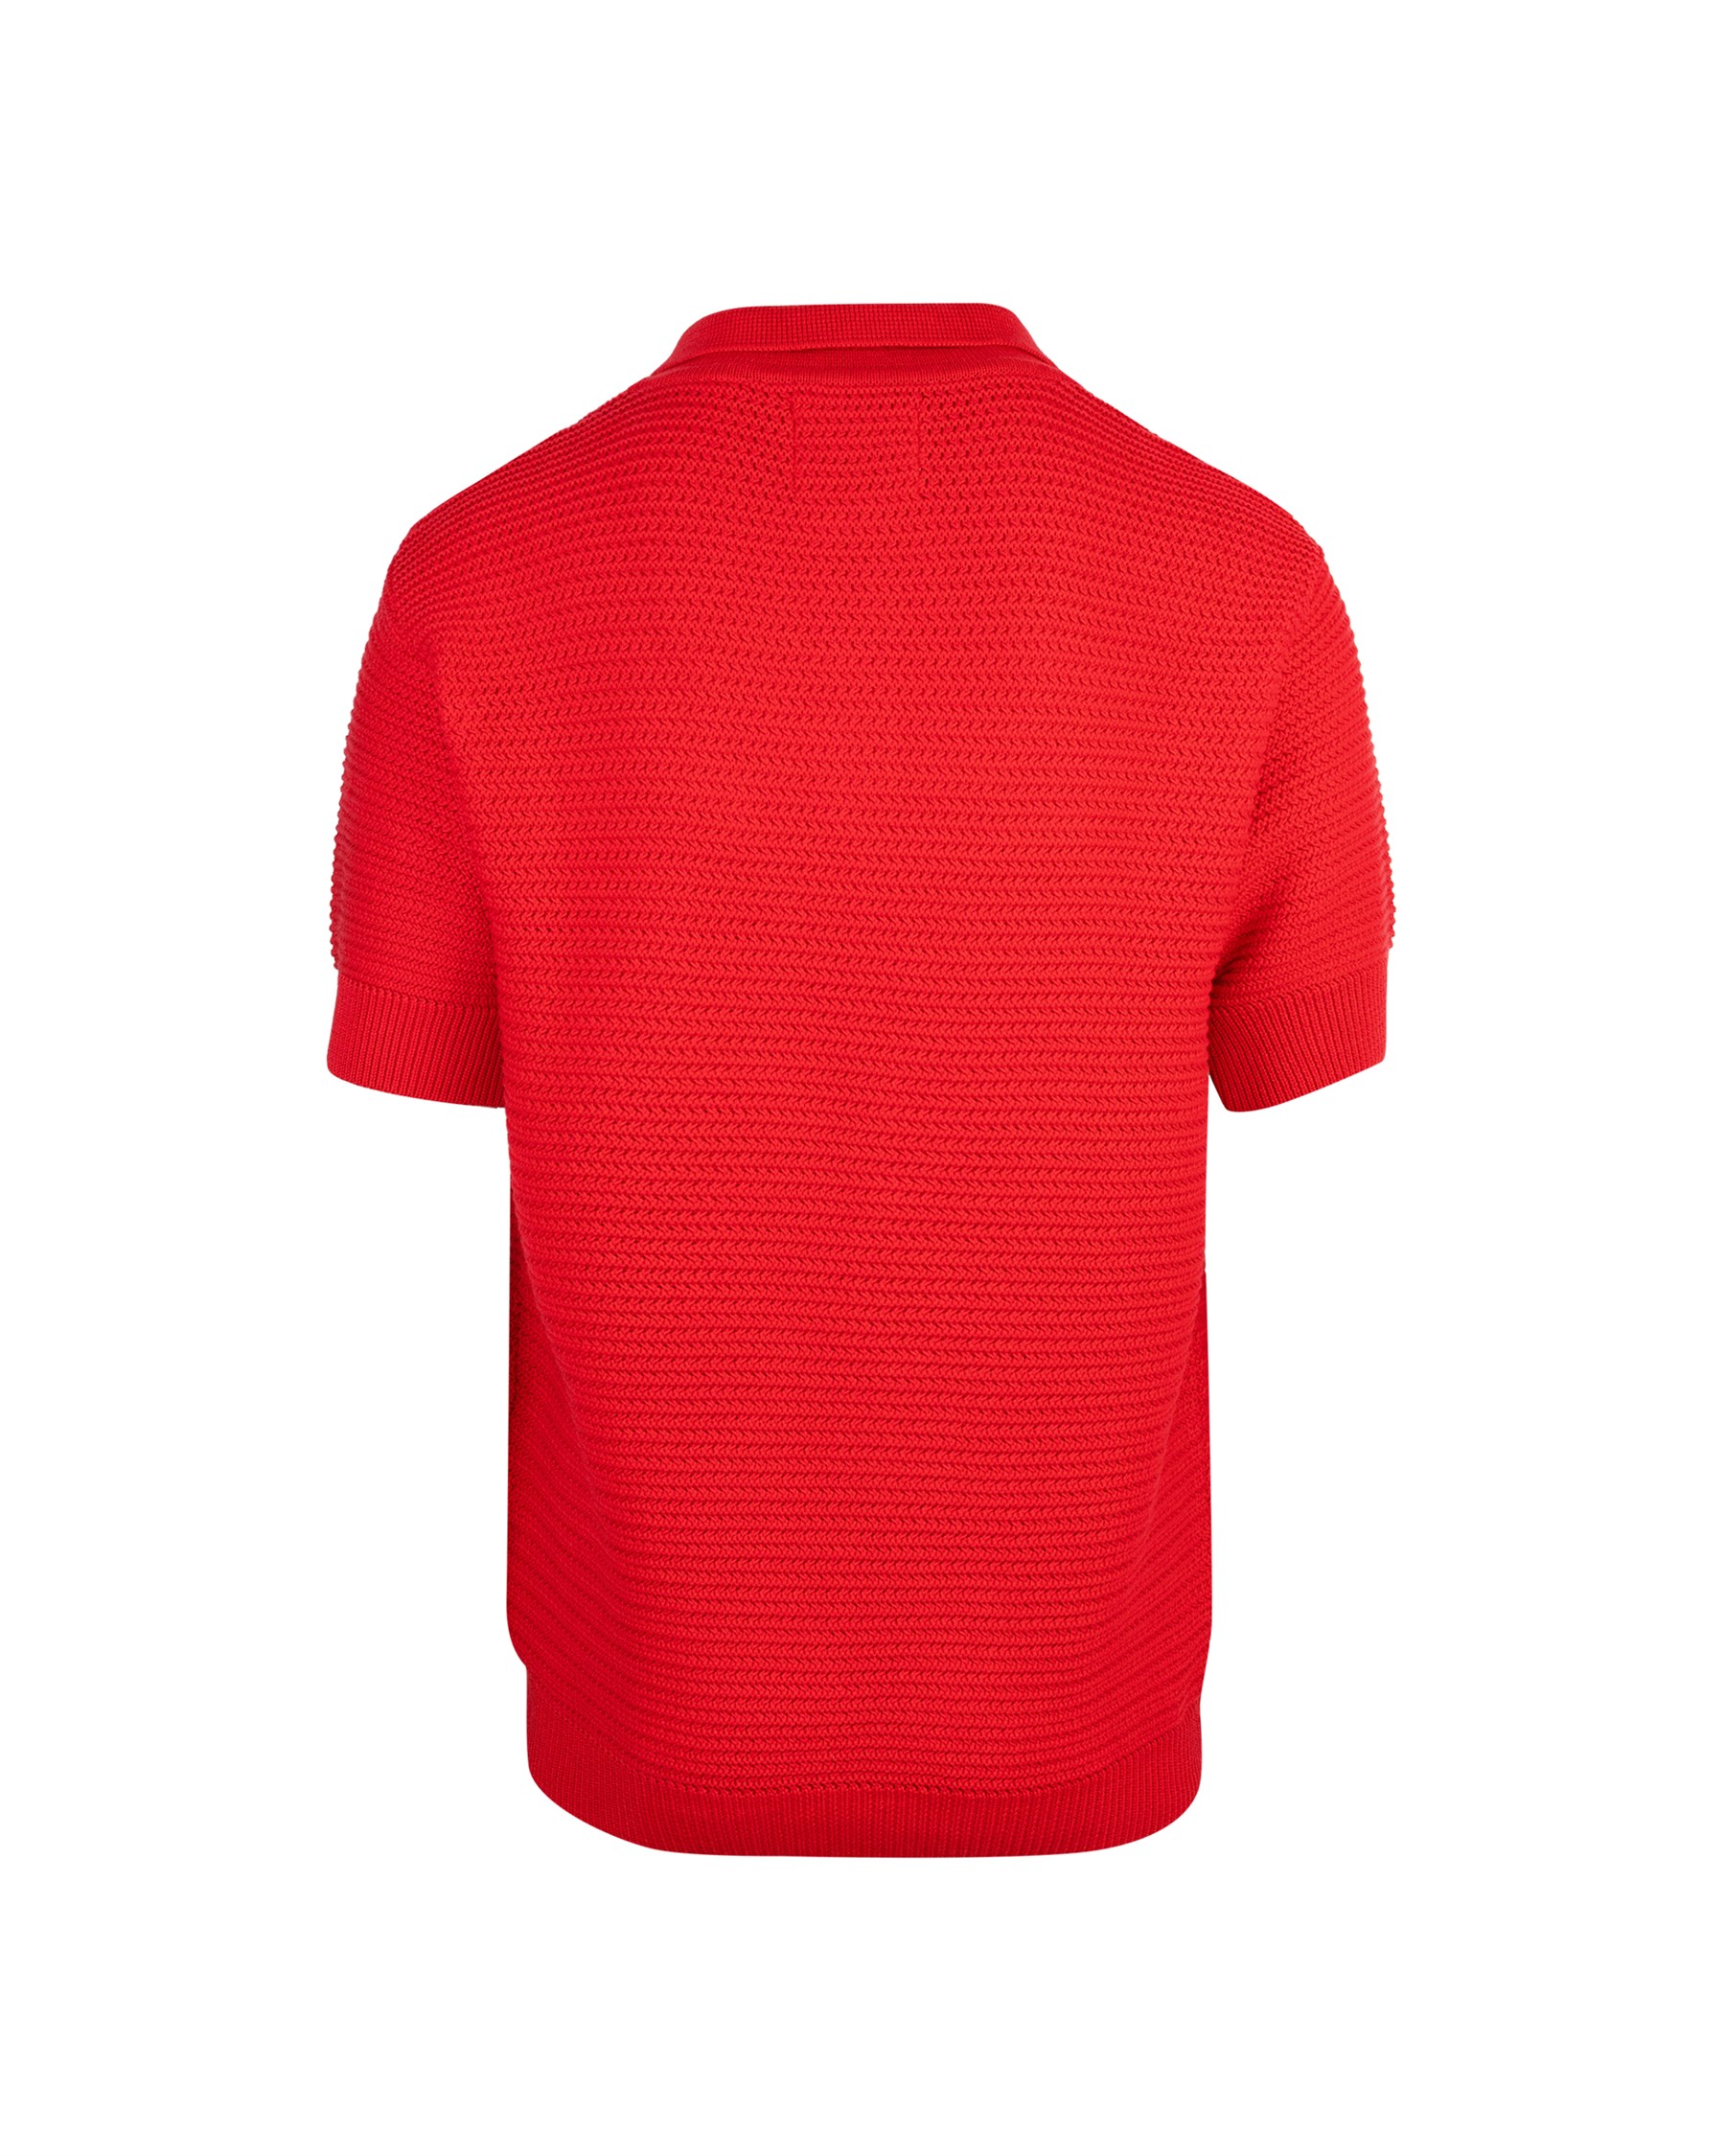 Shop Arte Antwerp Red Simon Knit Polo Shirt